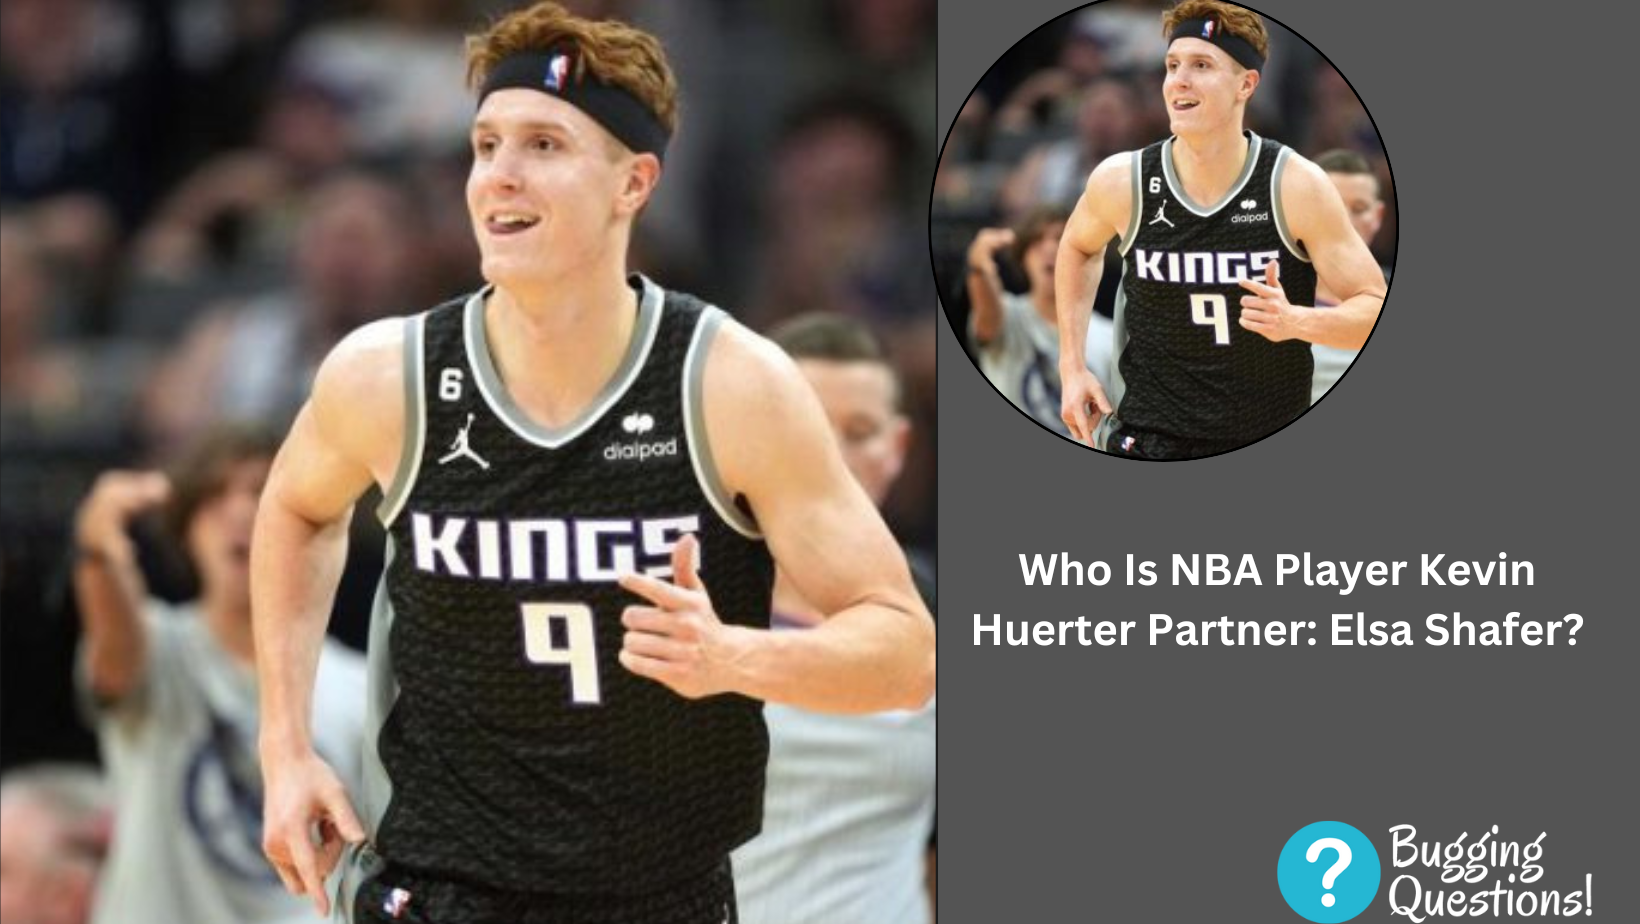 Who Is NBA Player Kevin Huerter Partner: Elsa Shafer?